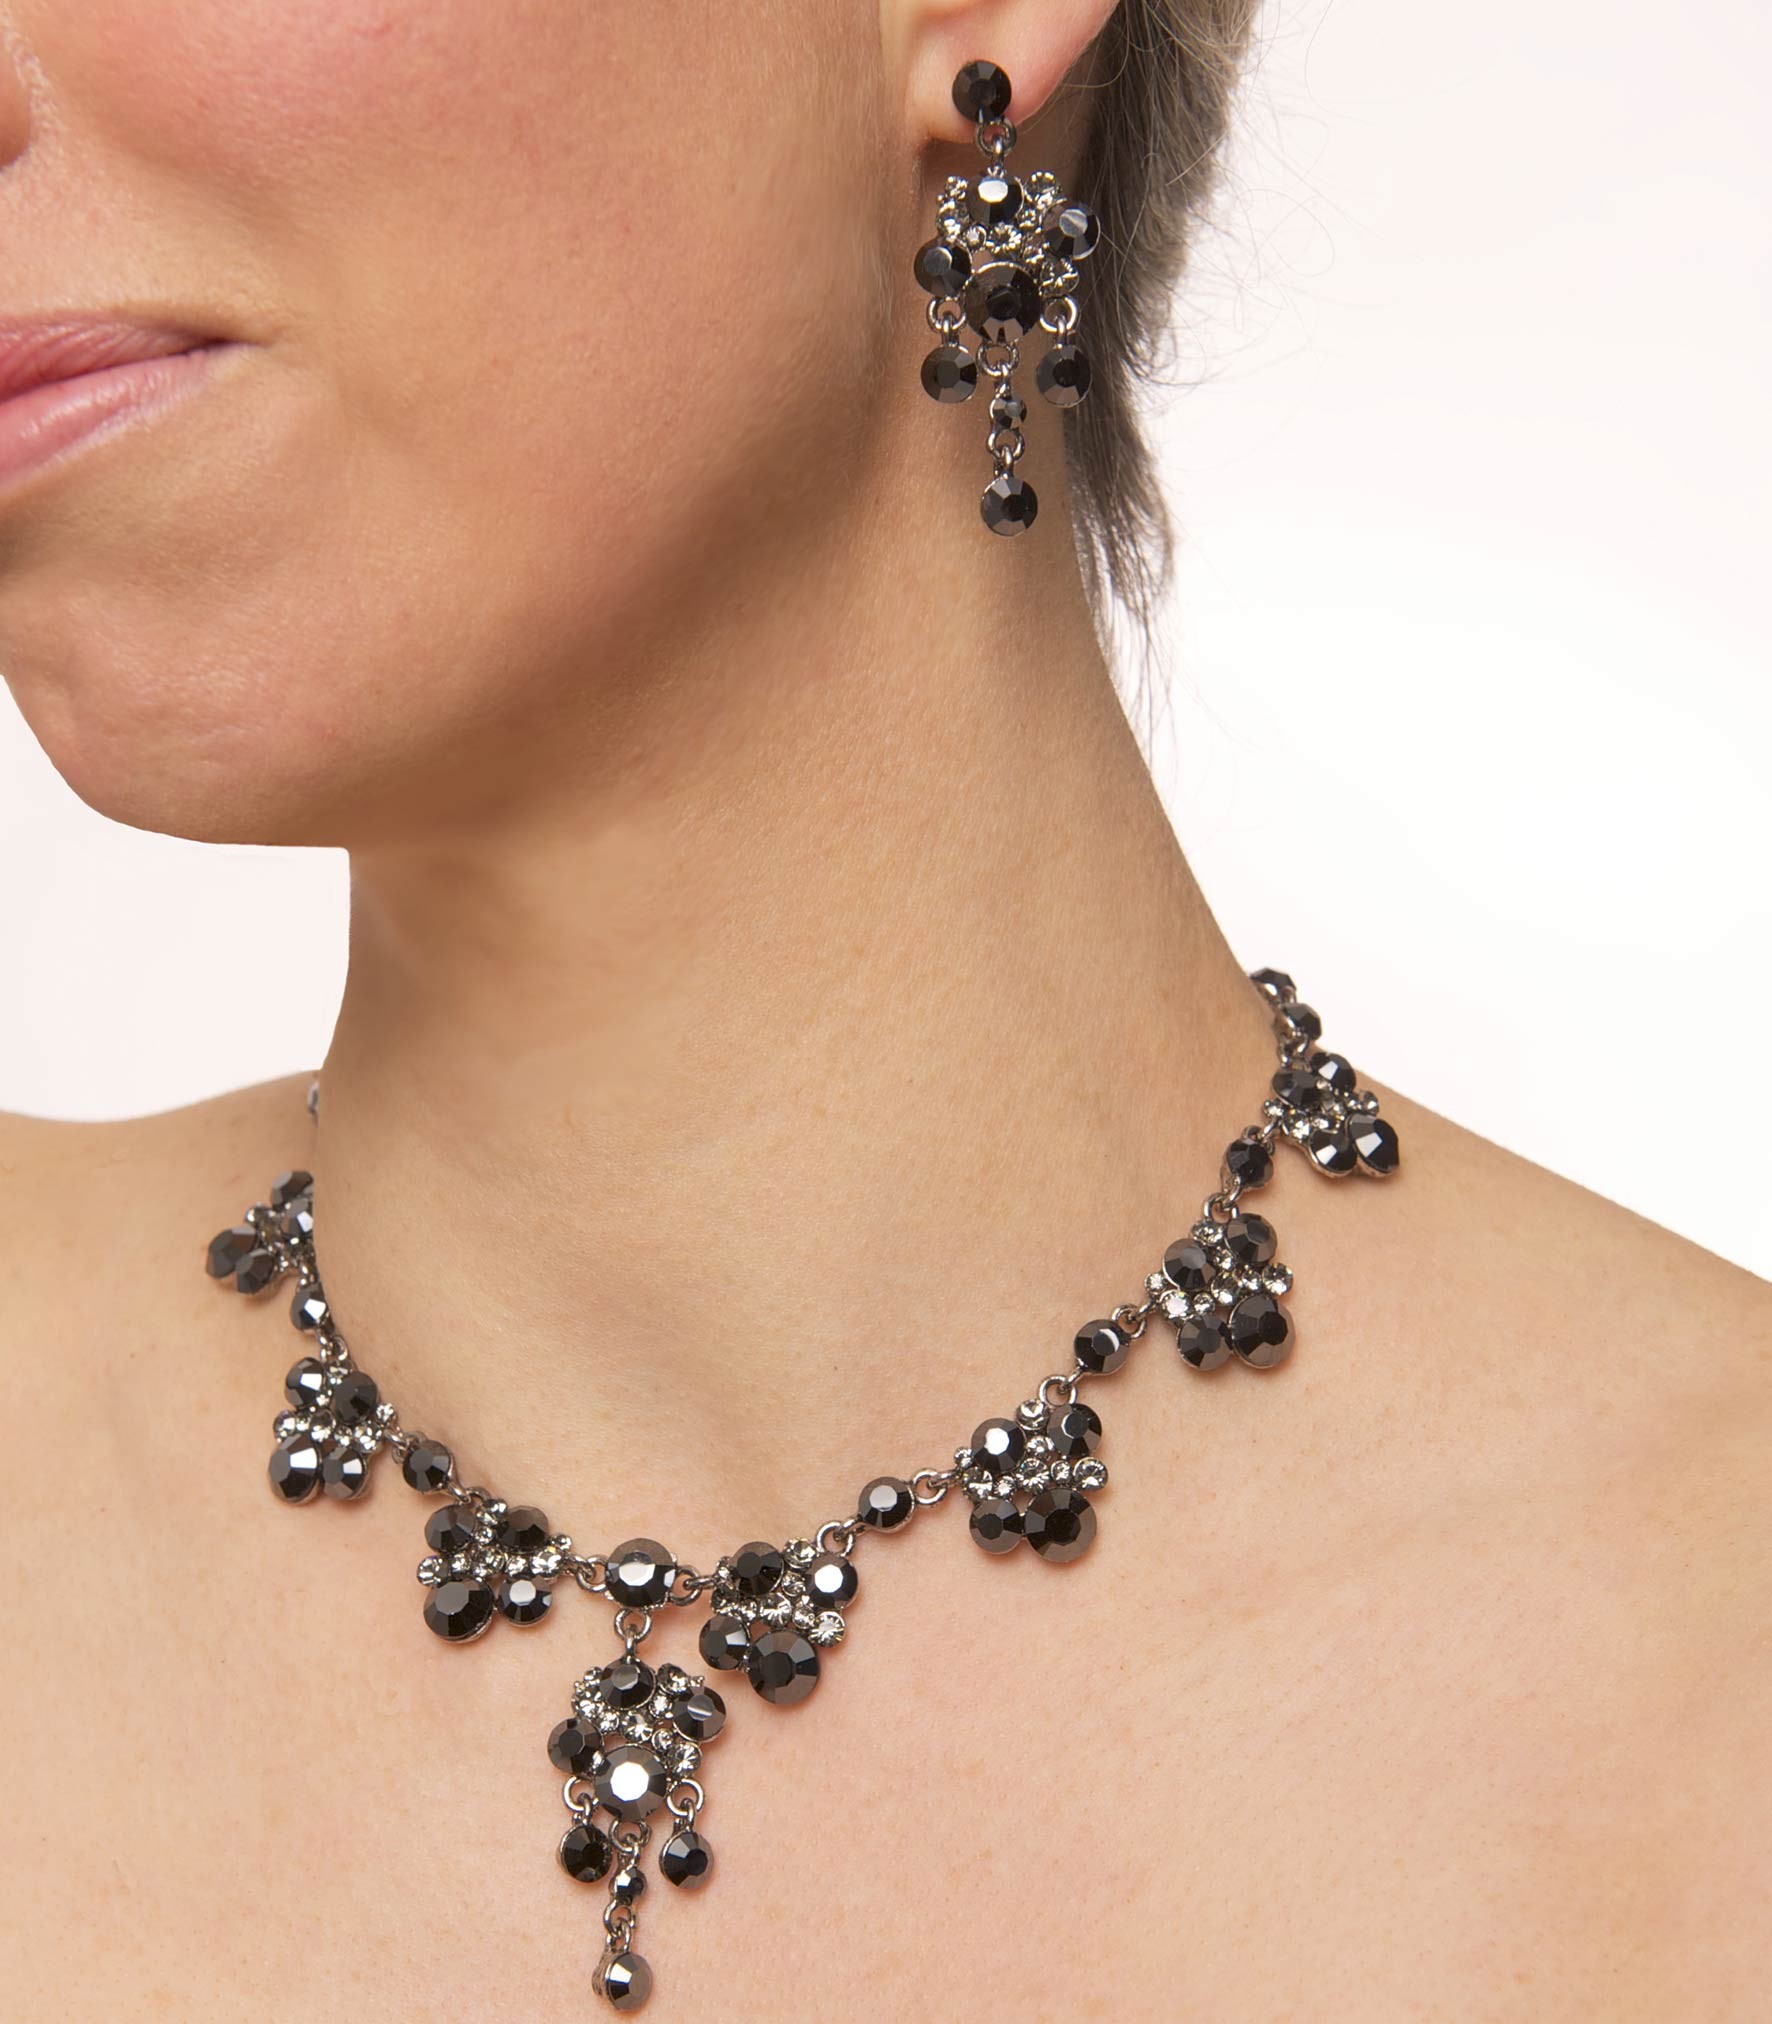 Swarovski Crystal Black Crystal Necklace and Earring Set, Cluster Drops